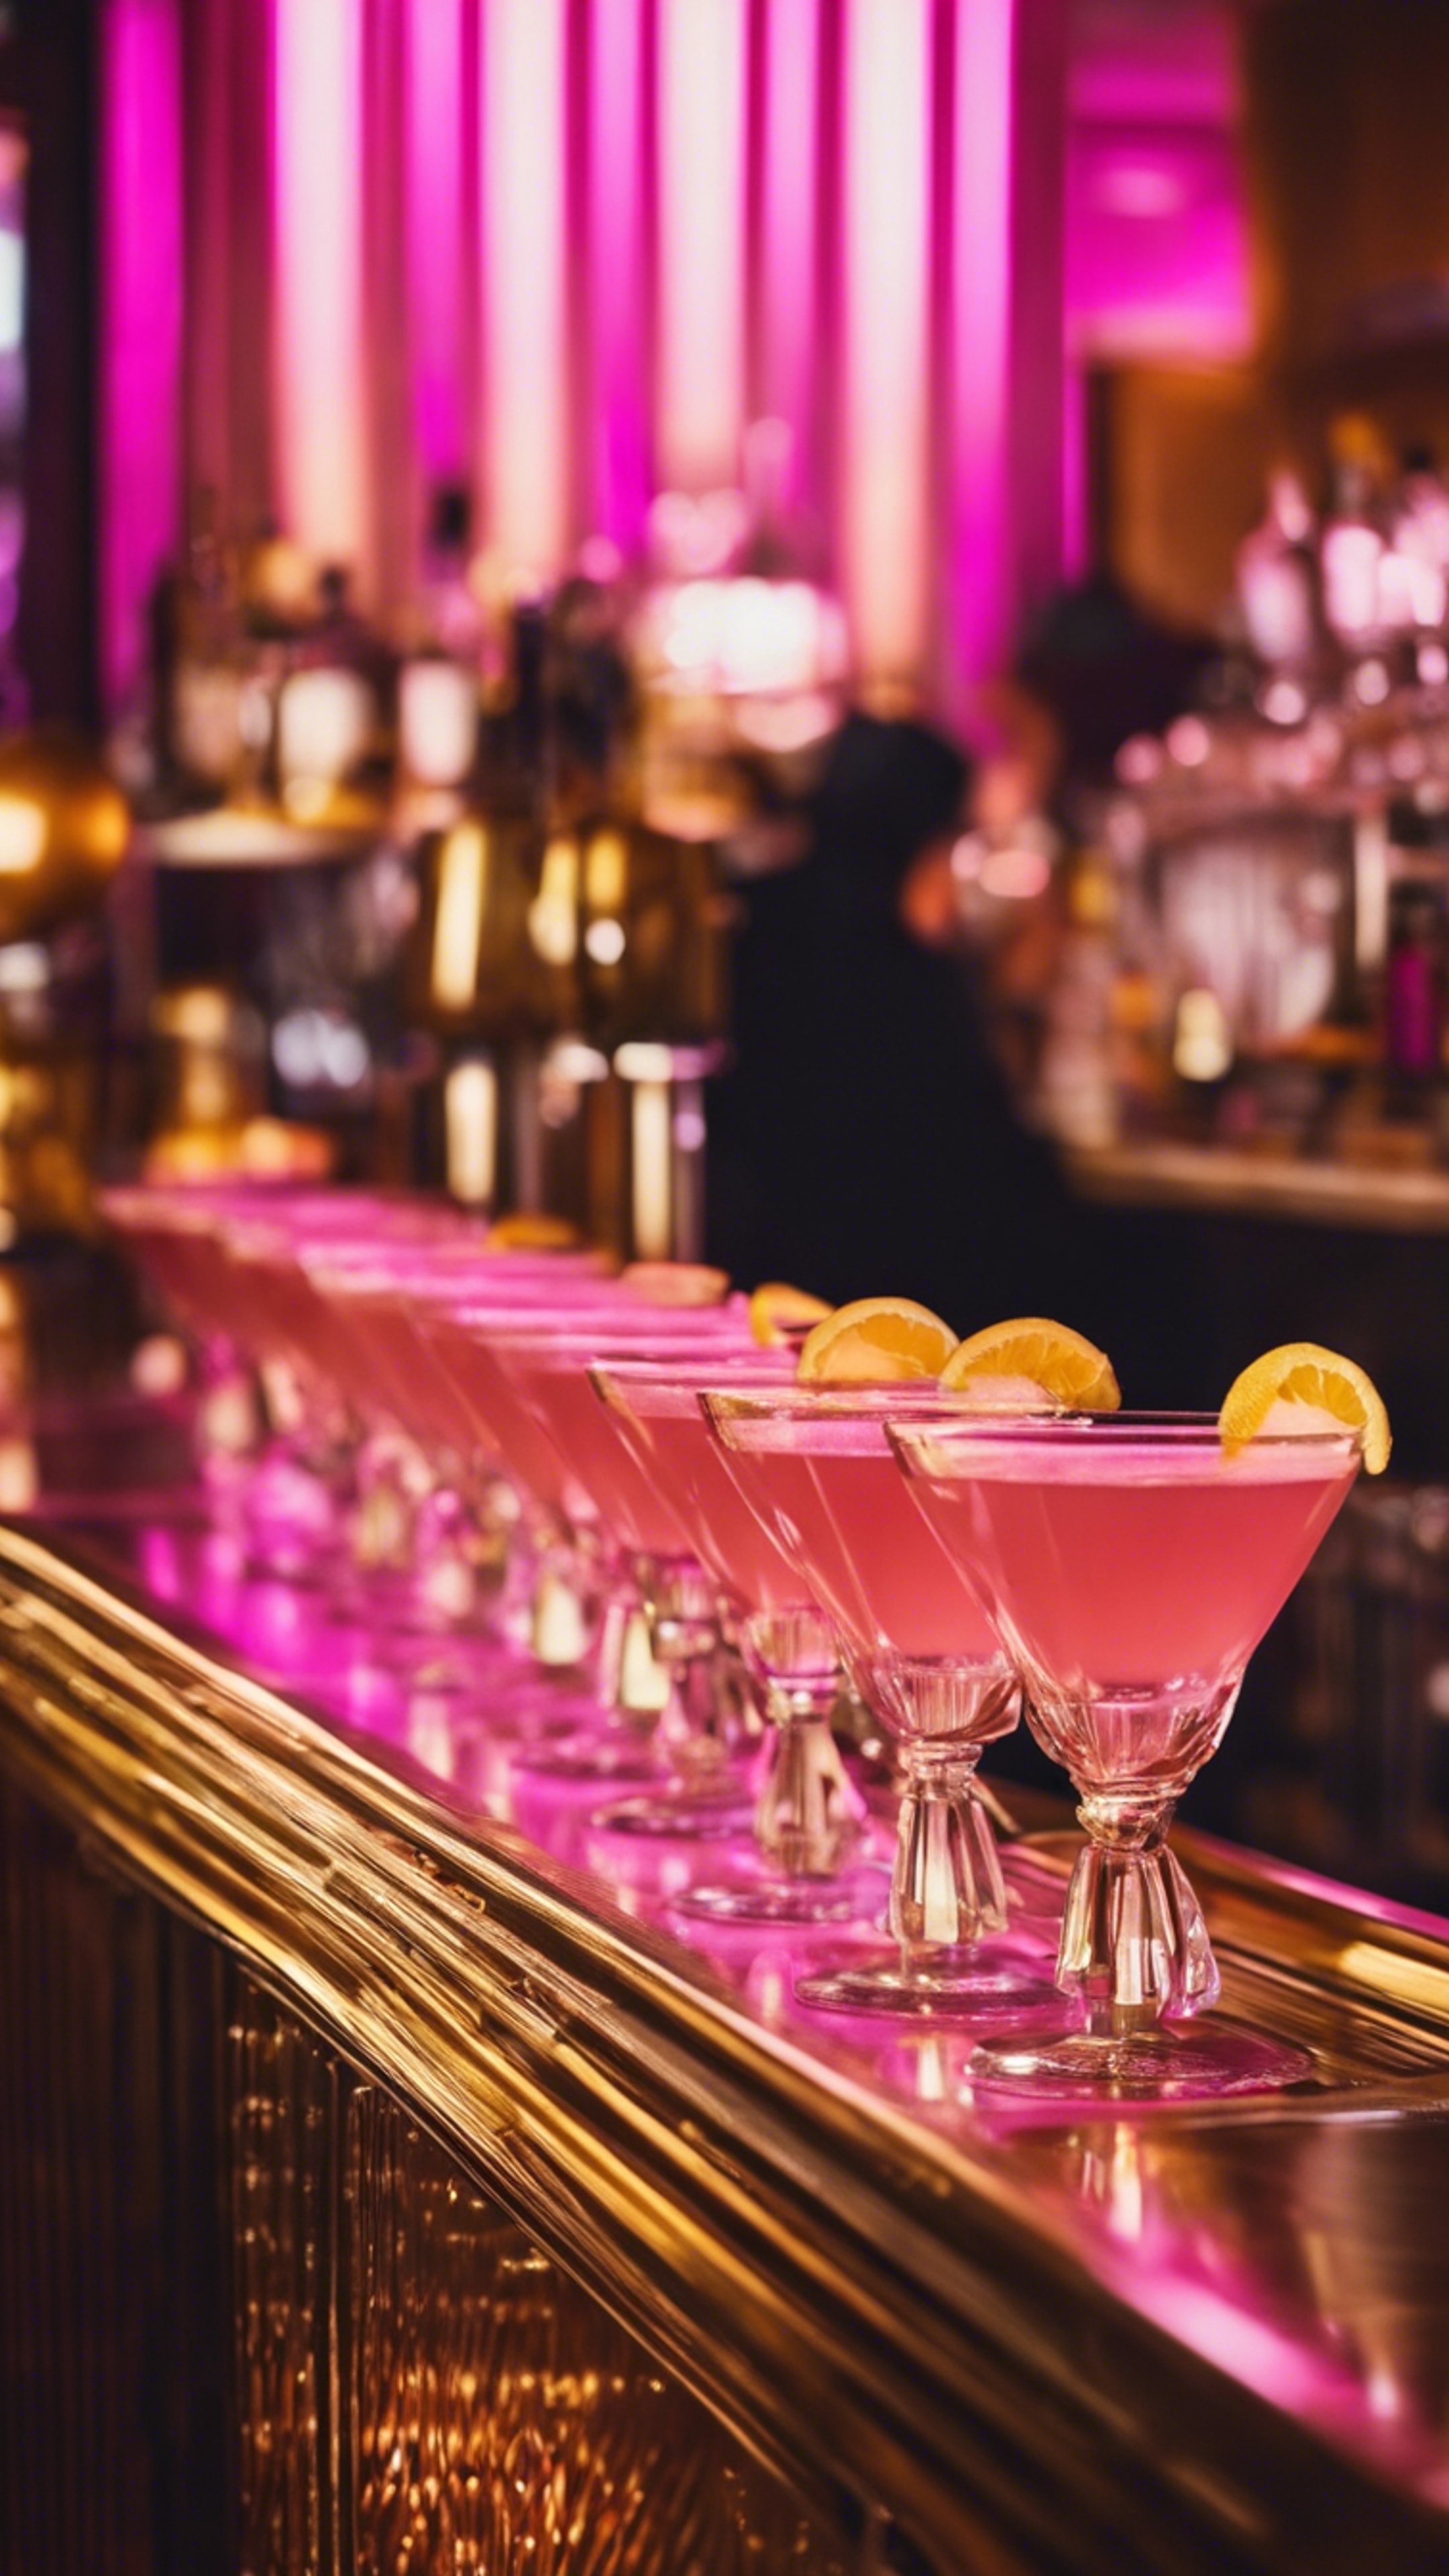 An art deco style pink and gold cocktail bar, bustling with glamour and elegance. duvar kağıdı[0d4a66f95ef04aa3ad16]